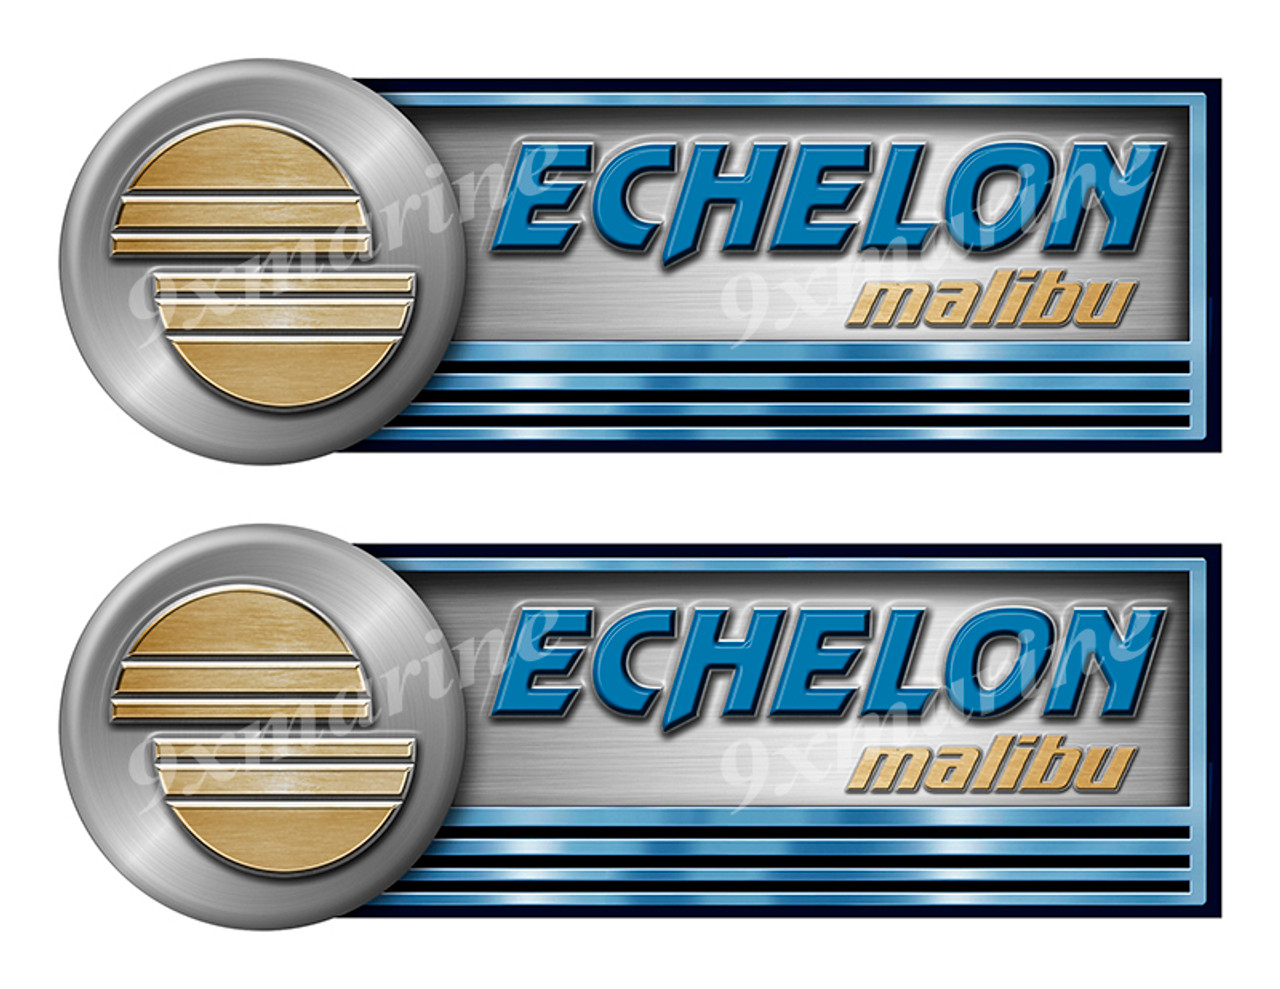 Two Echelon (Malibu) Stickers - 10"x3.5" each